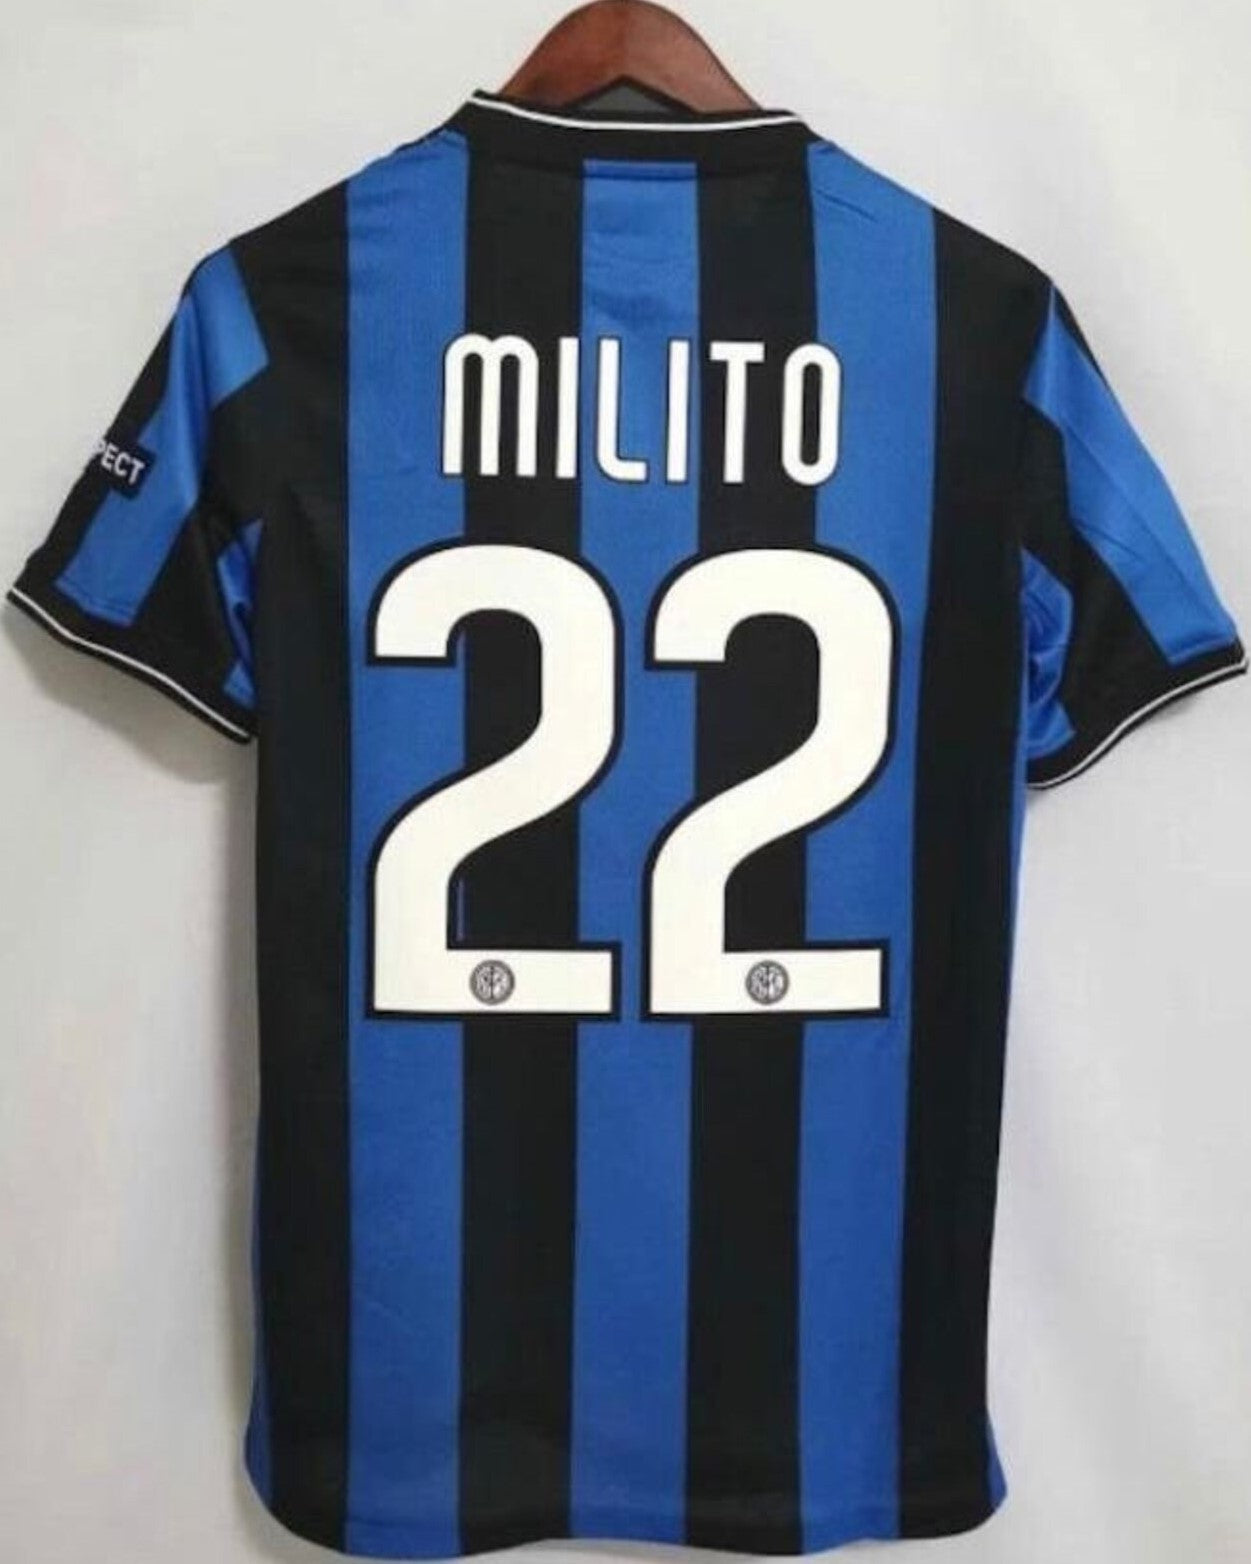 MILITO DIEGO 2009-10 (Int)